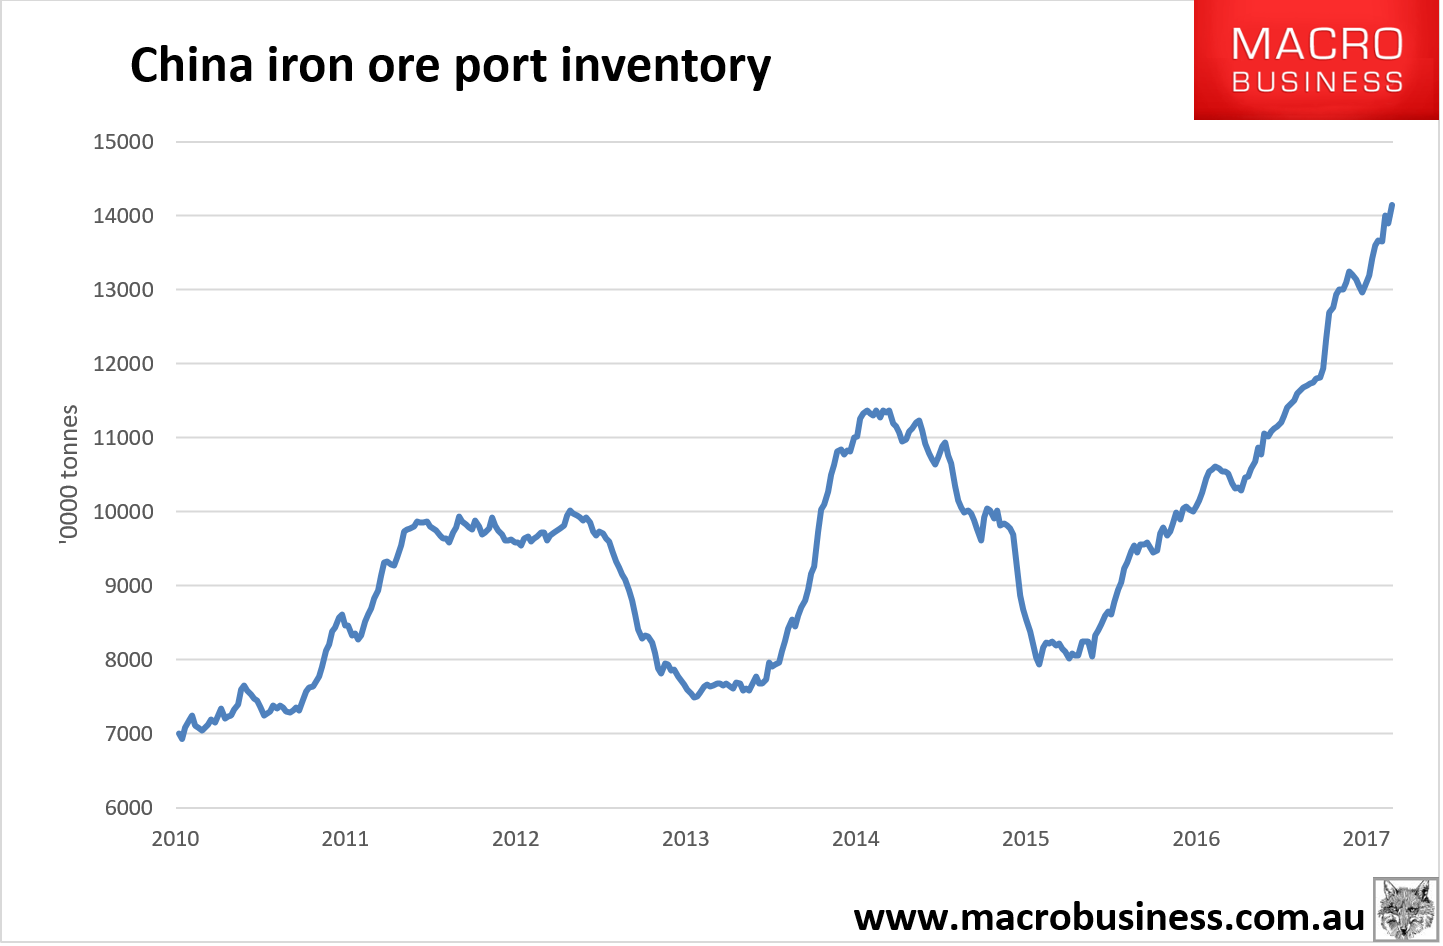 Iron Ore prices are heading where?